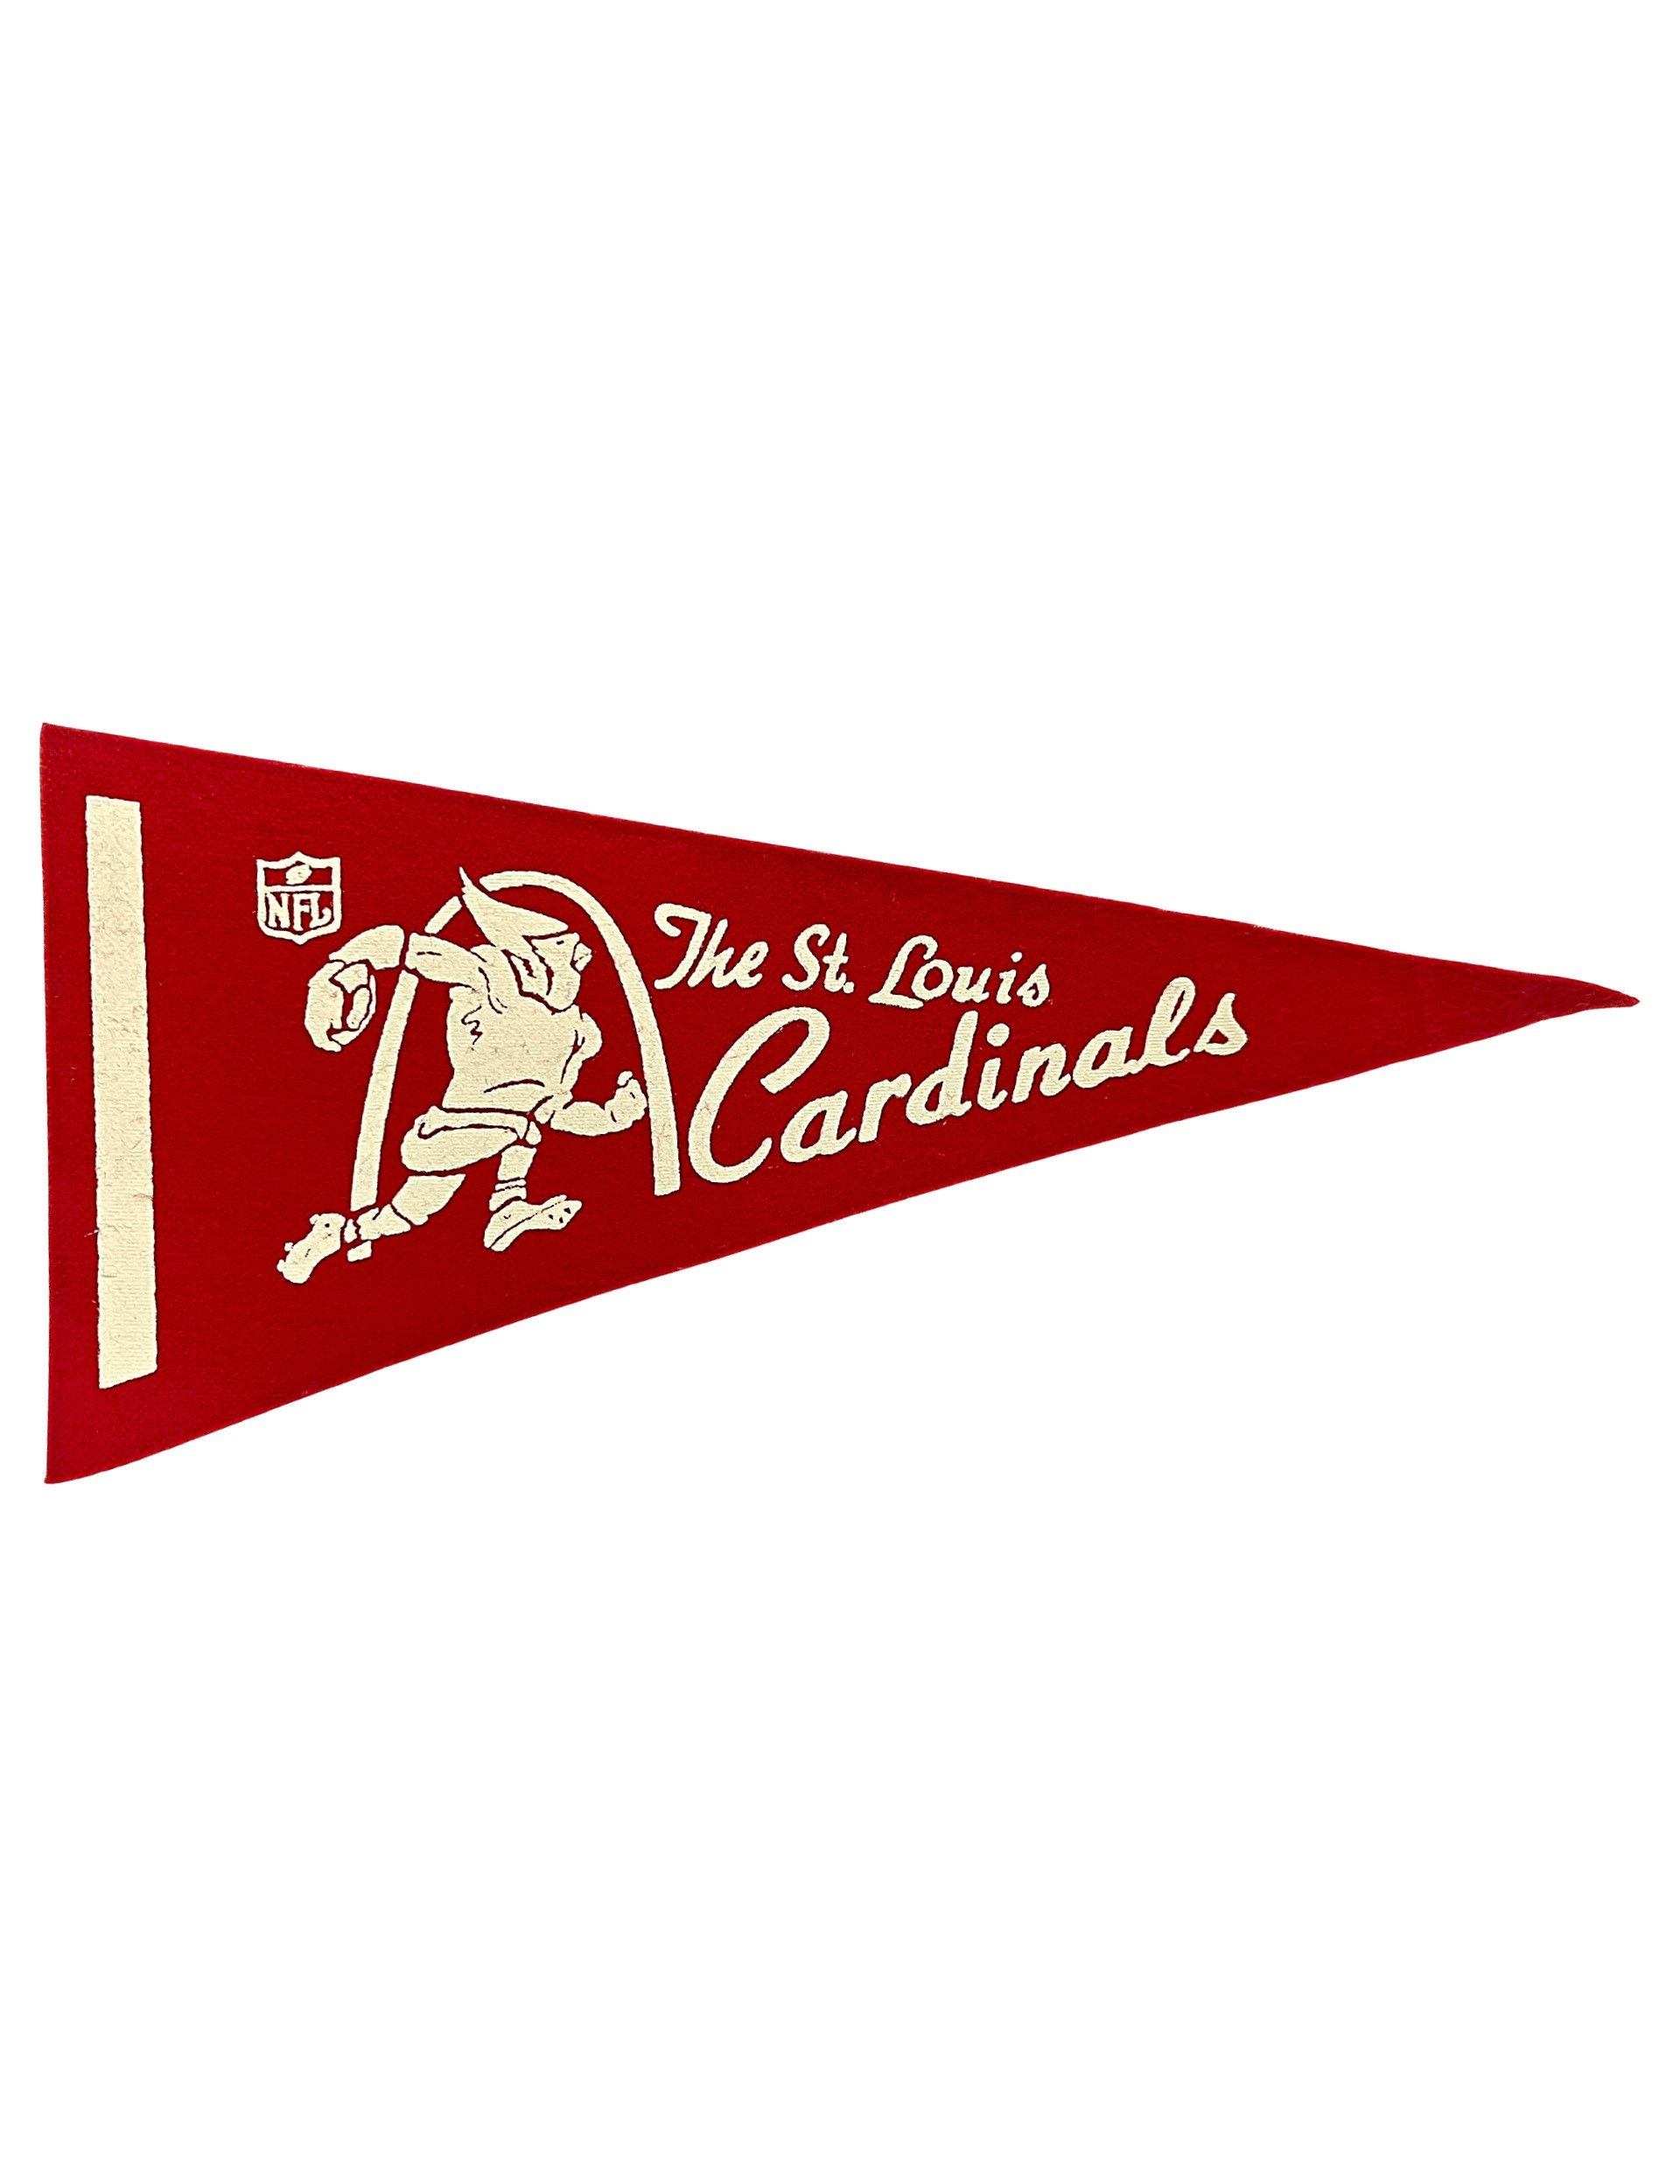 ST. LOUIS CARDINALS LOGO red 11X14 CAR flag GENUINE MLB Licensed US